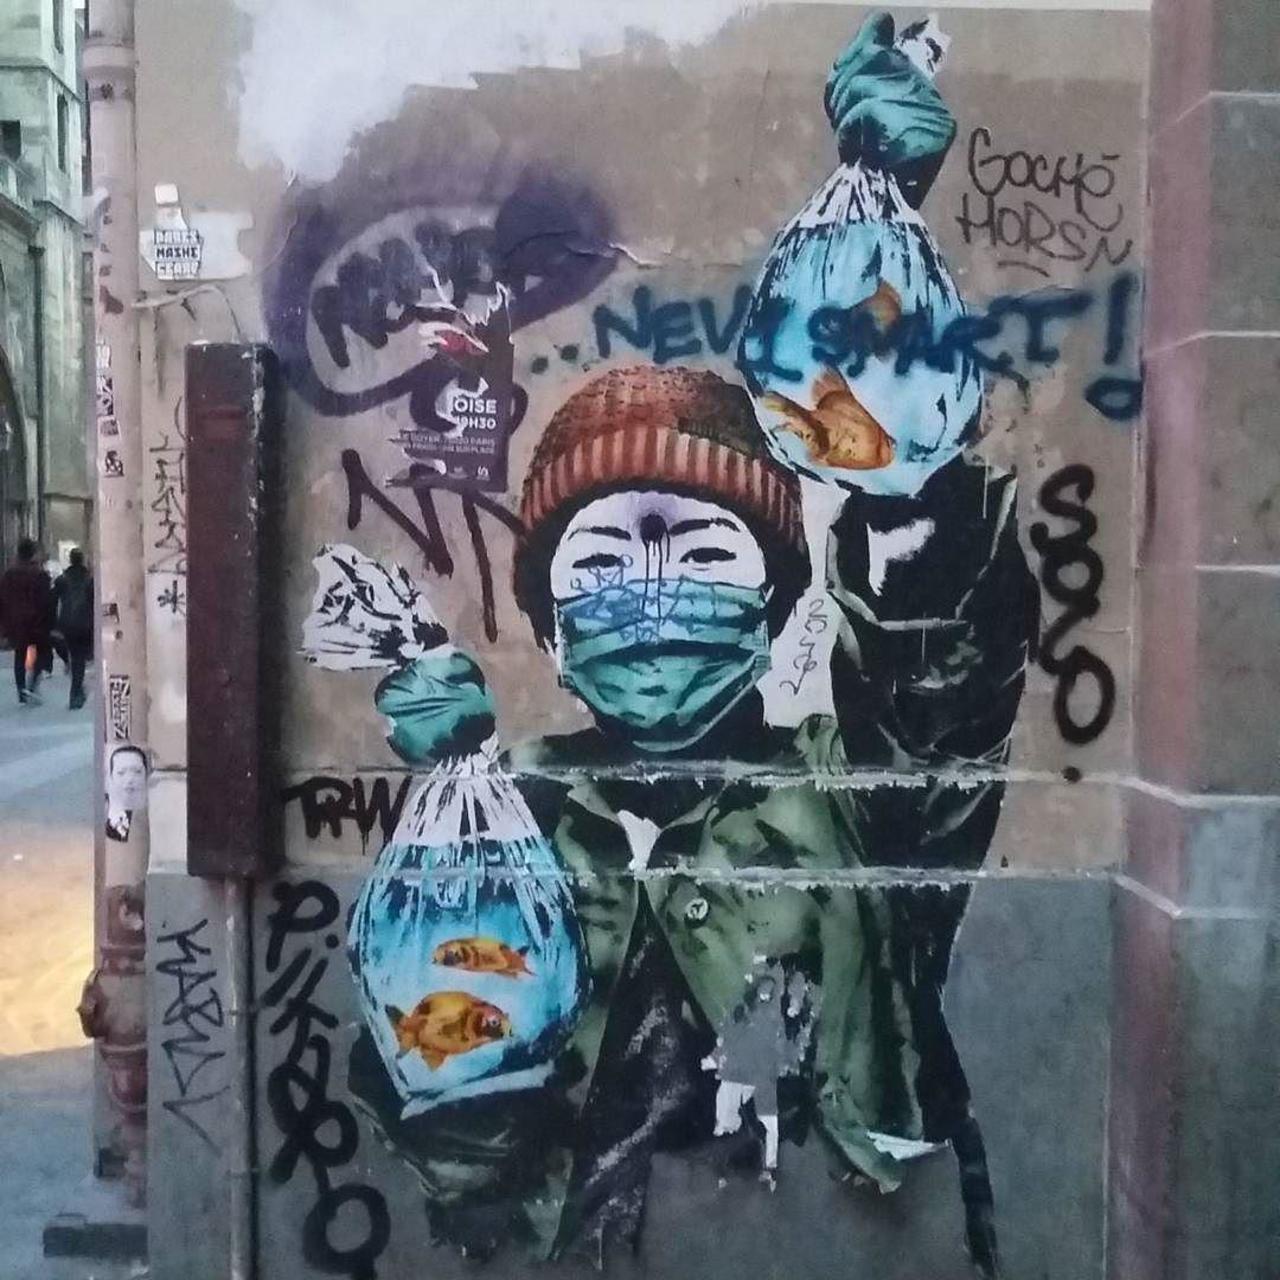 circumjacent_fr: #Paris #graffiti photo by tangereena http://ift.tt/1VMwdF1 #StreetArt http://t.co/uh4ffJVF0T